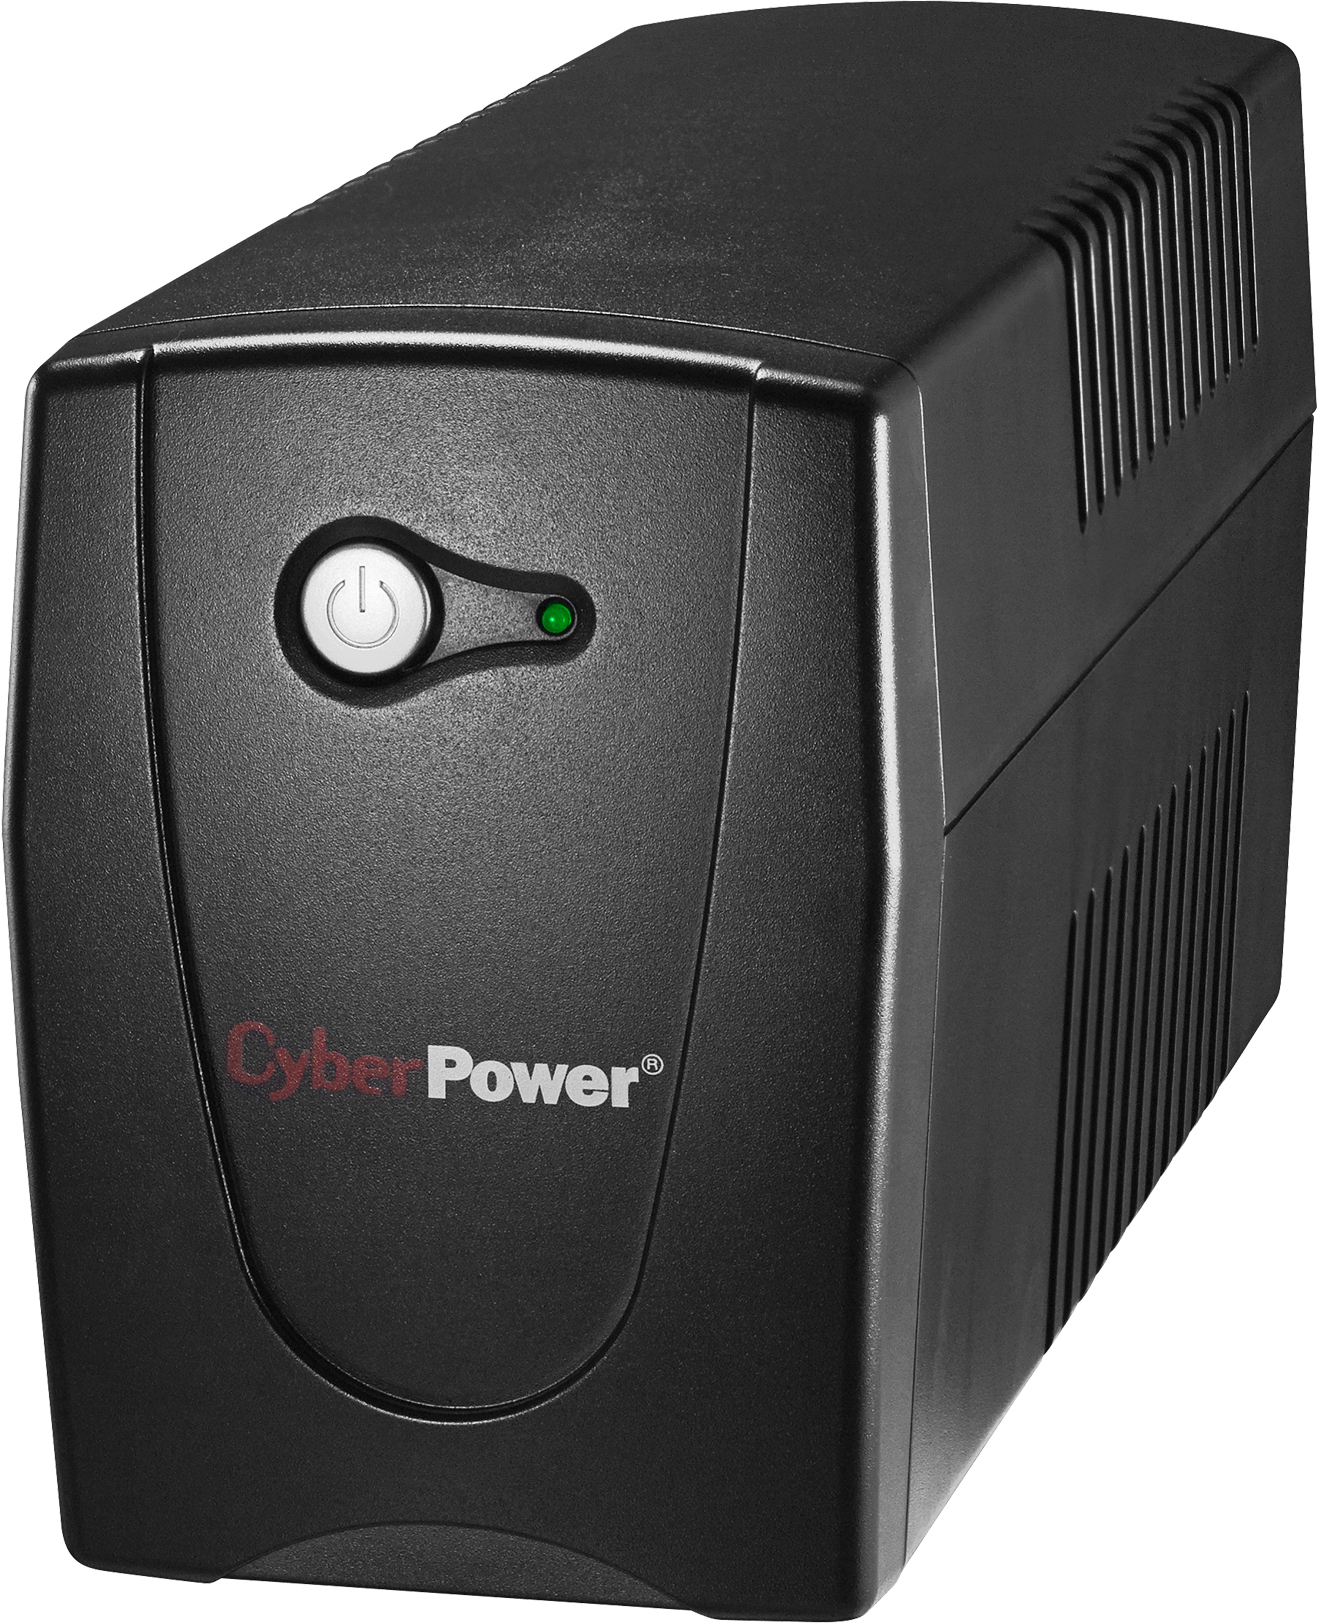 ИБП CyberPower VALUE 600EI, Line-Interactive, 600VA/360W, USB&Serial, RJ11/RJ45, 3 IEC-320 С13 розетки, Black, 0.2х0.24х0.33м.,VALUE 600EI